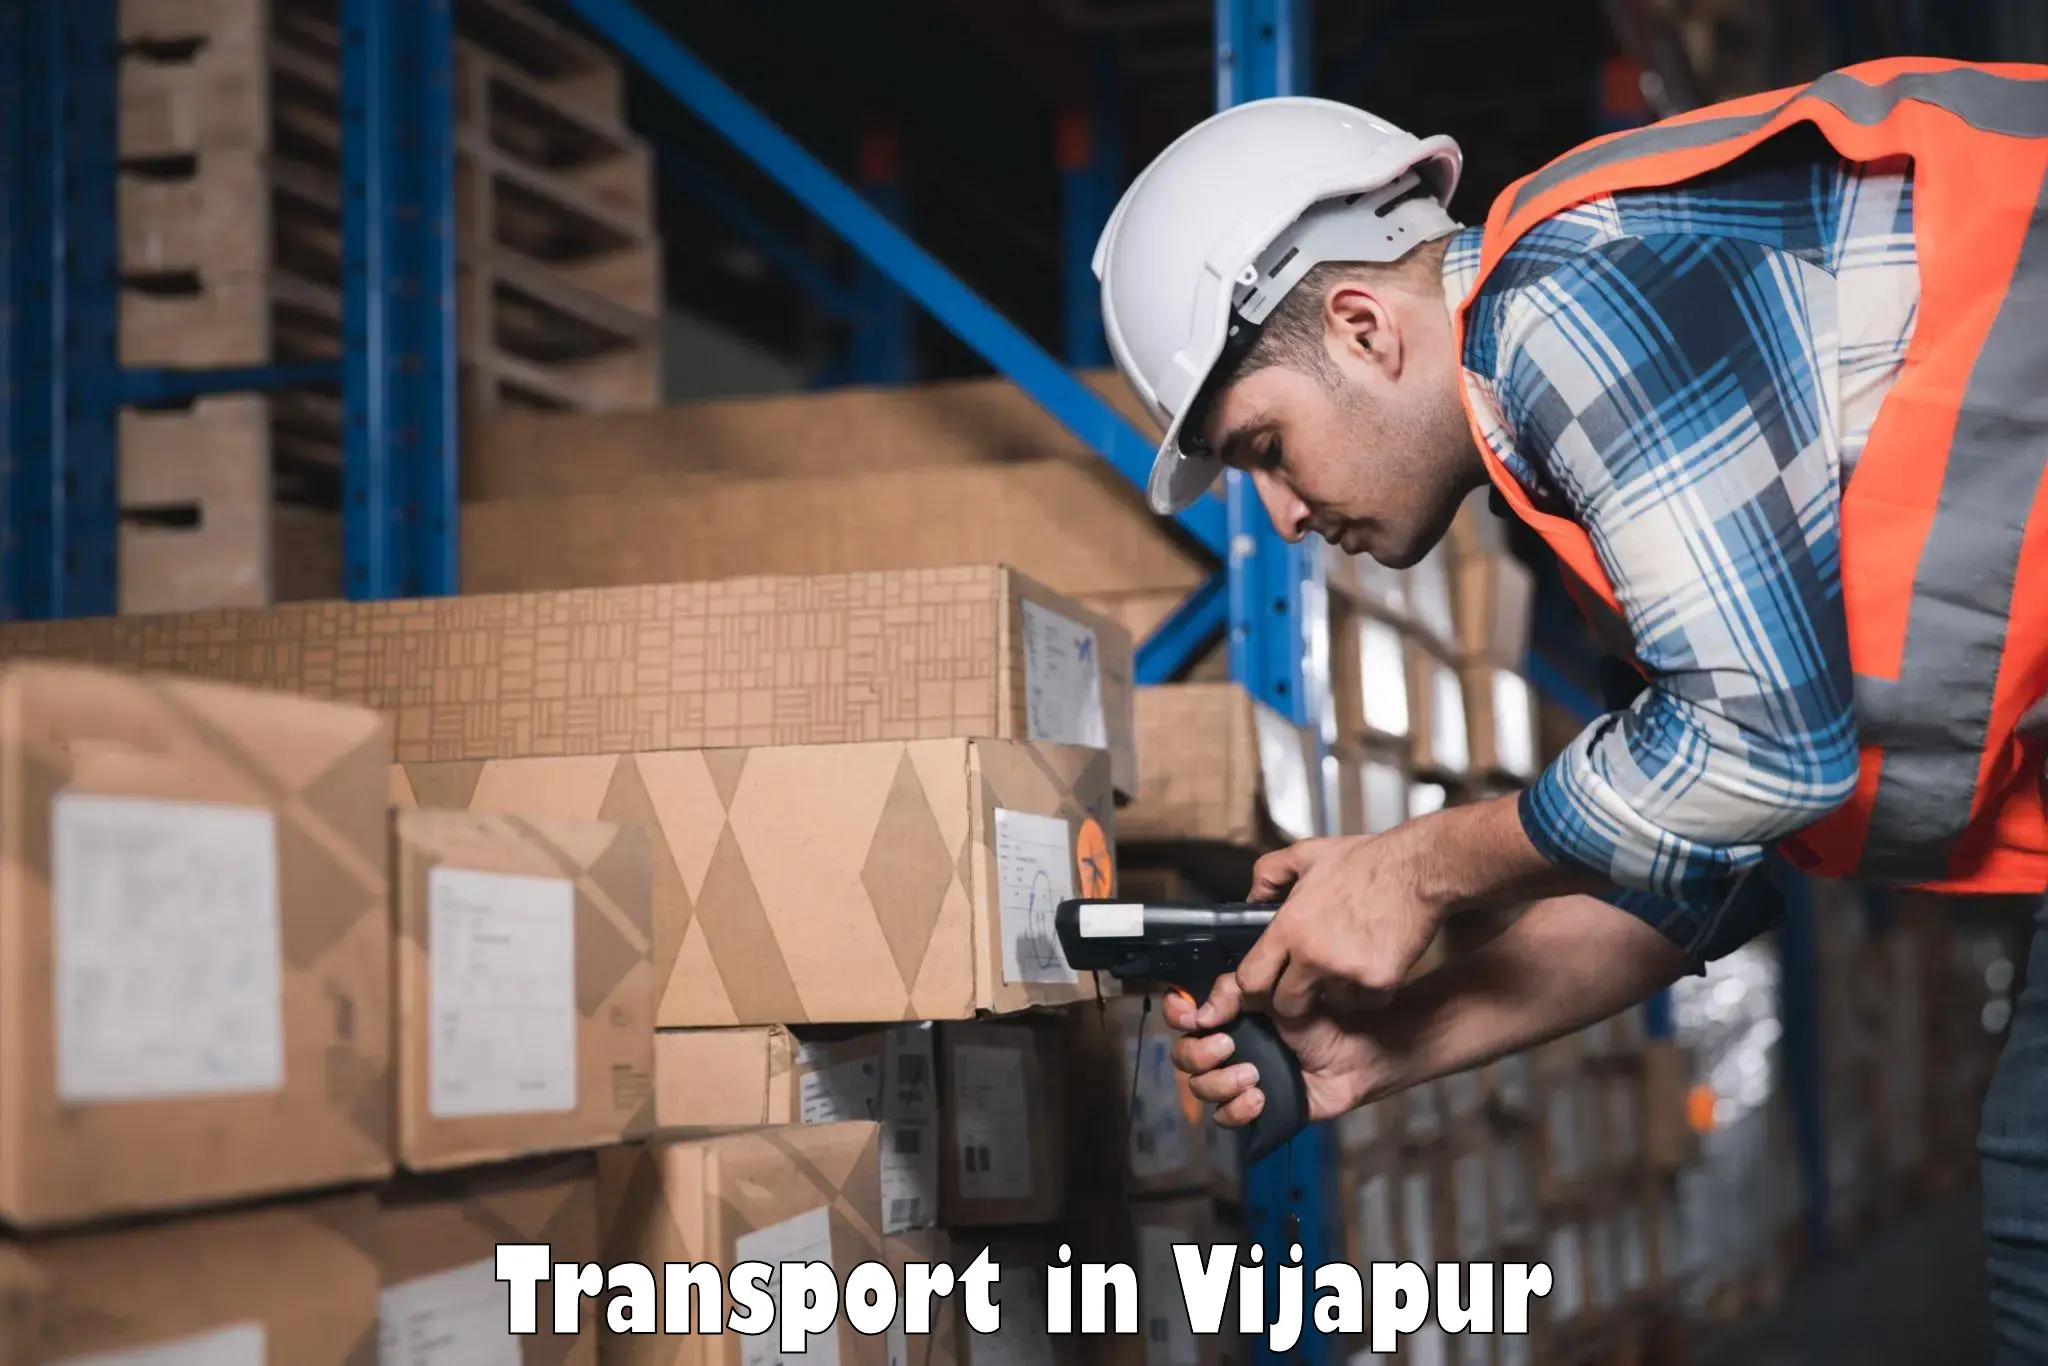 Daily parcel service transport in Vijapur